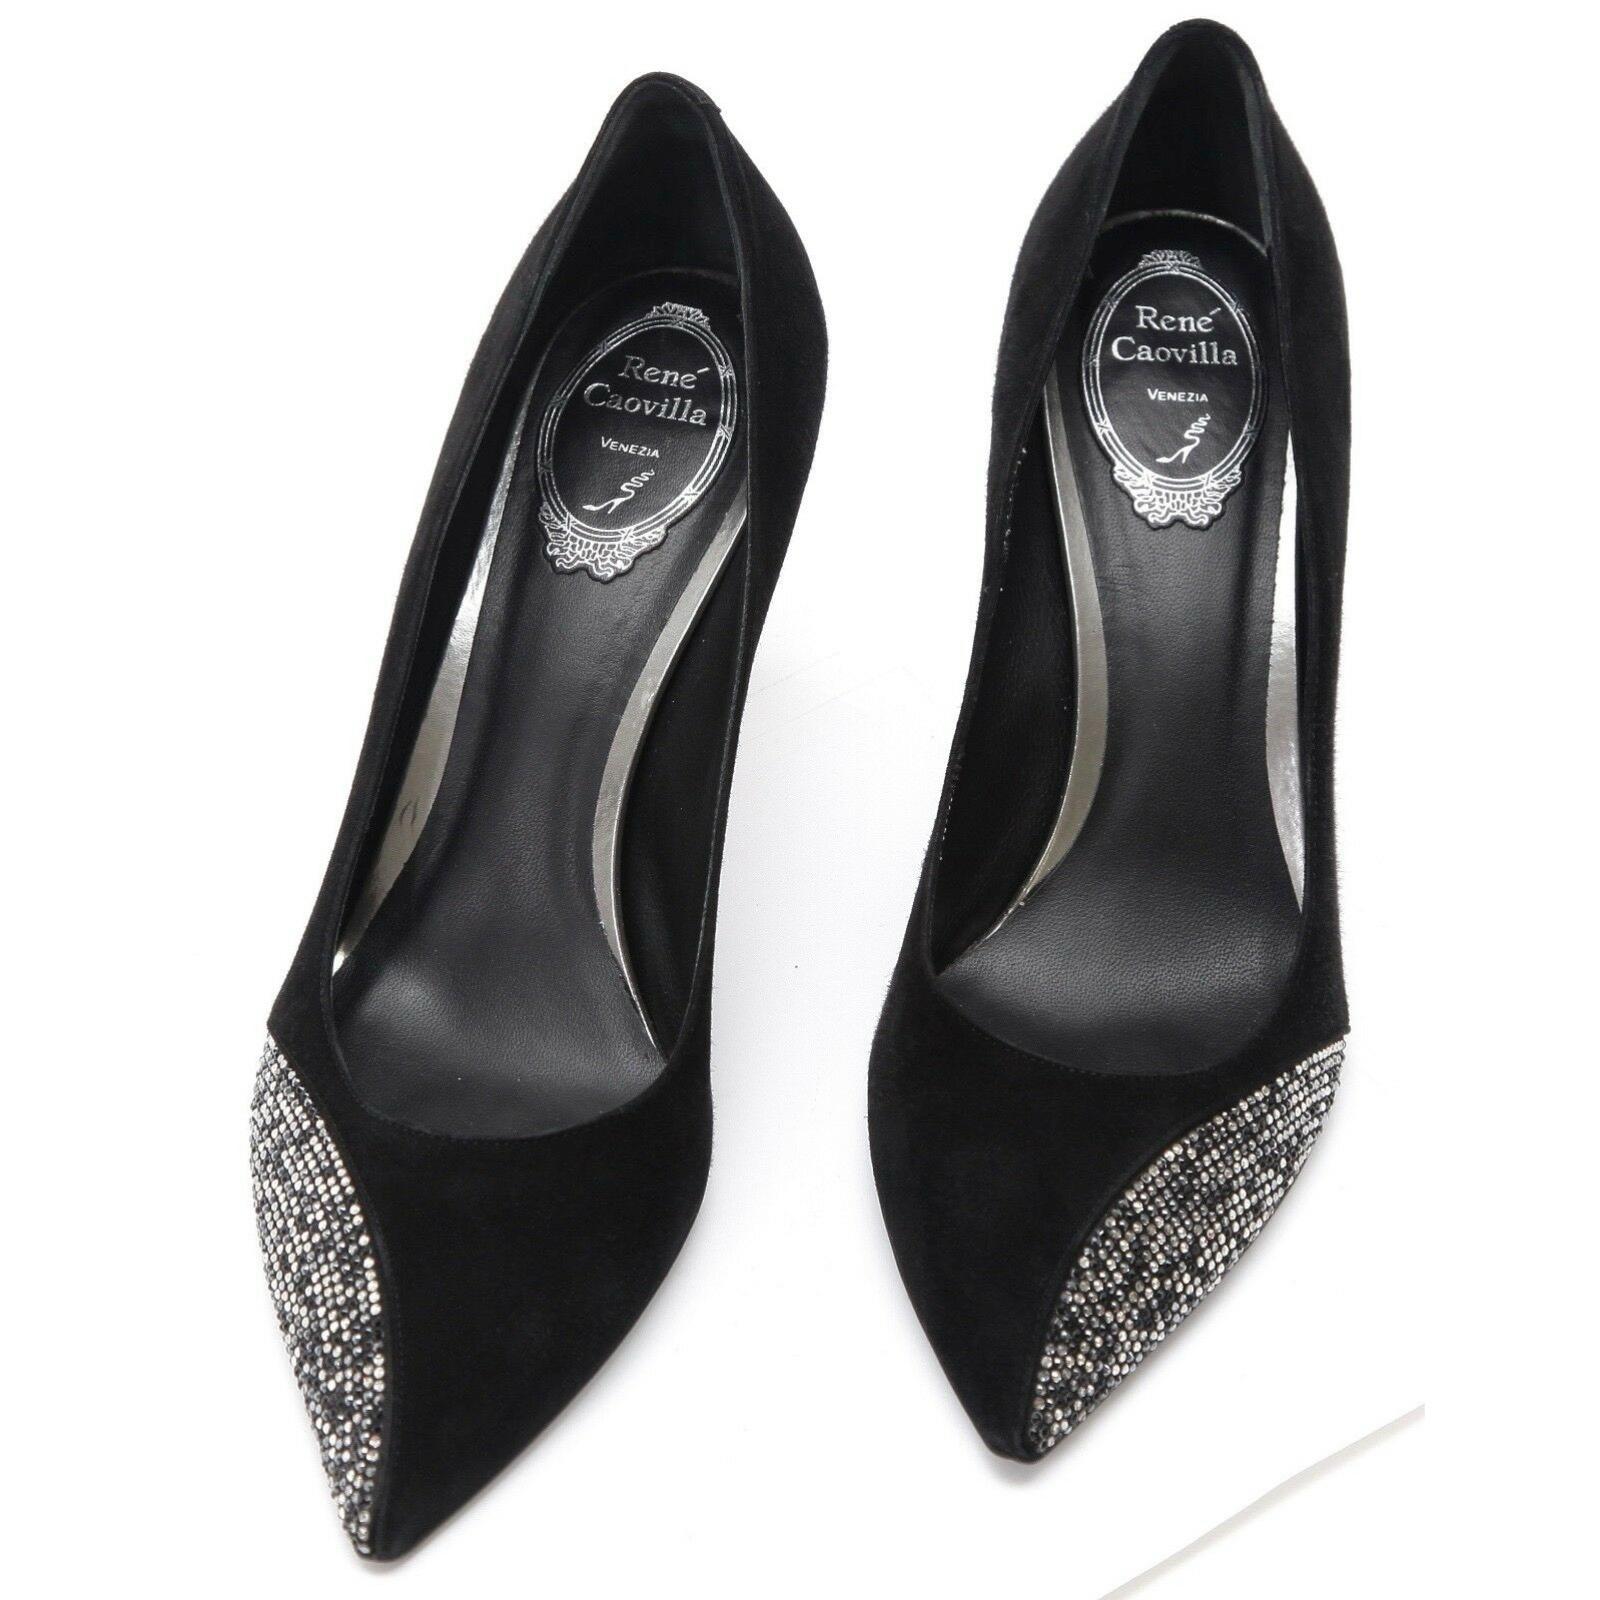 RENE CAOVILLA Pumps Black Suede Crystal Pointed Toe Heel Sz 40 For Sale 1